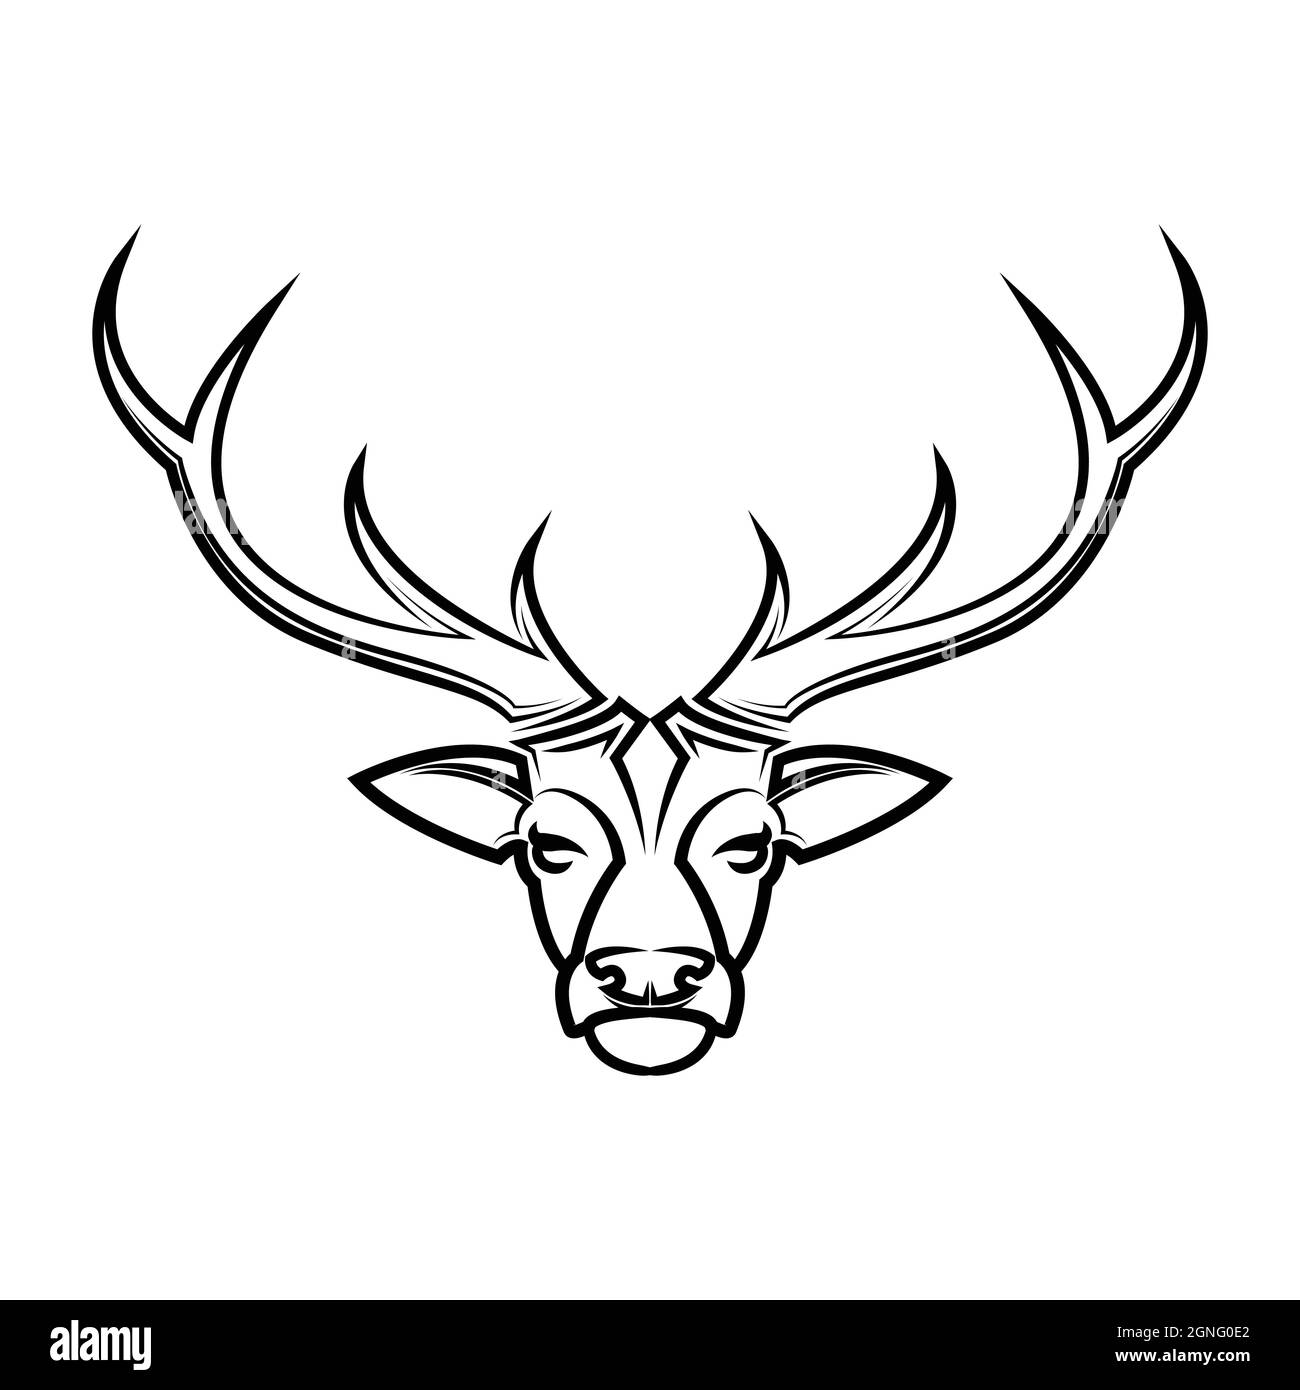 Deer Skull Tattoos  Ideas Designs  Meaning  Tattoo Me Now